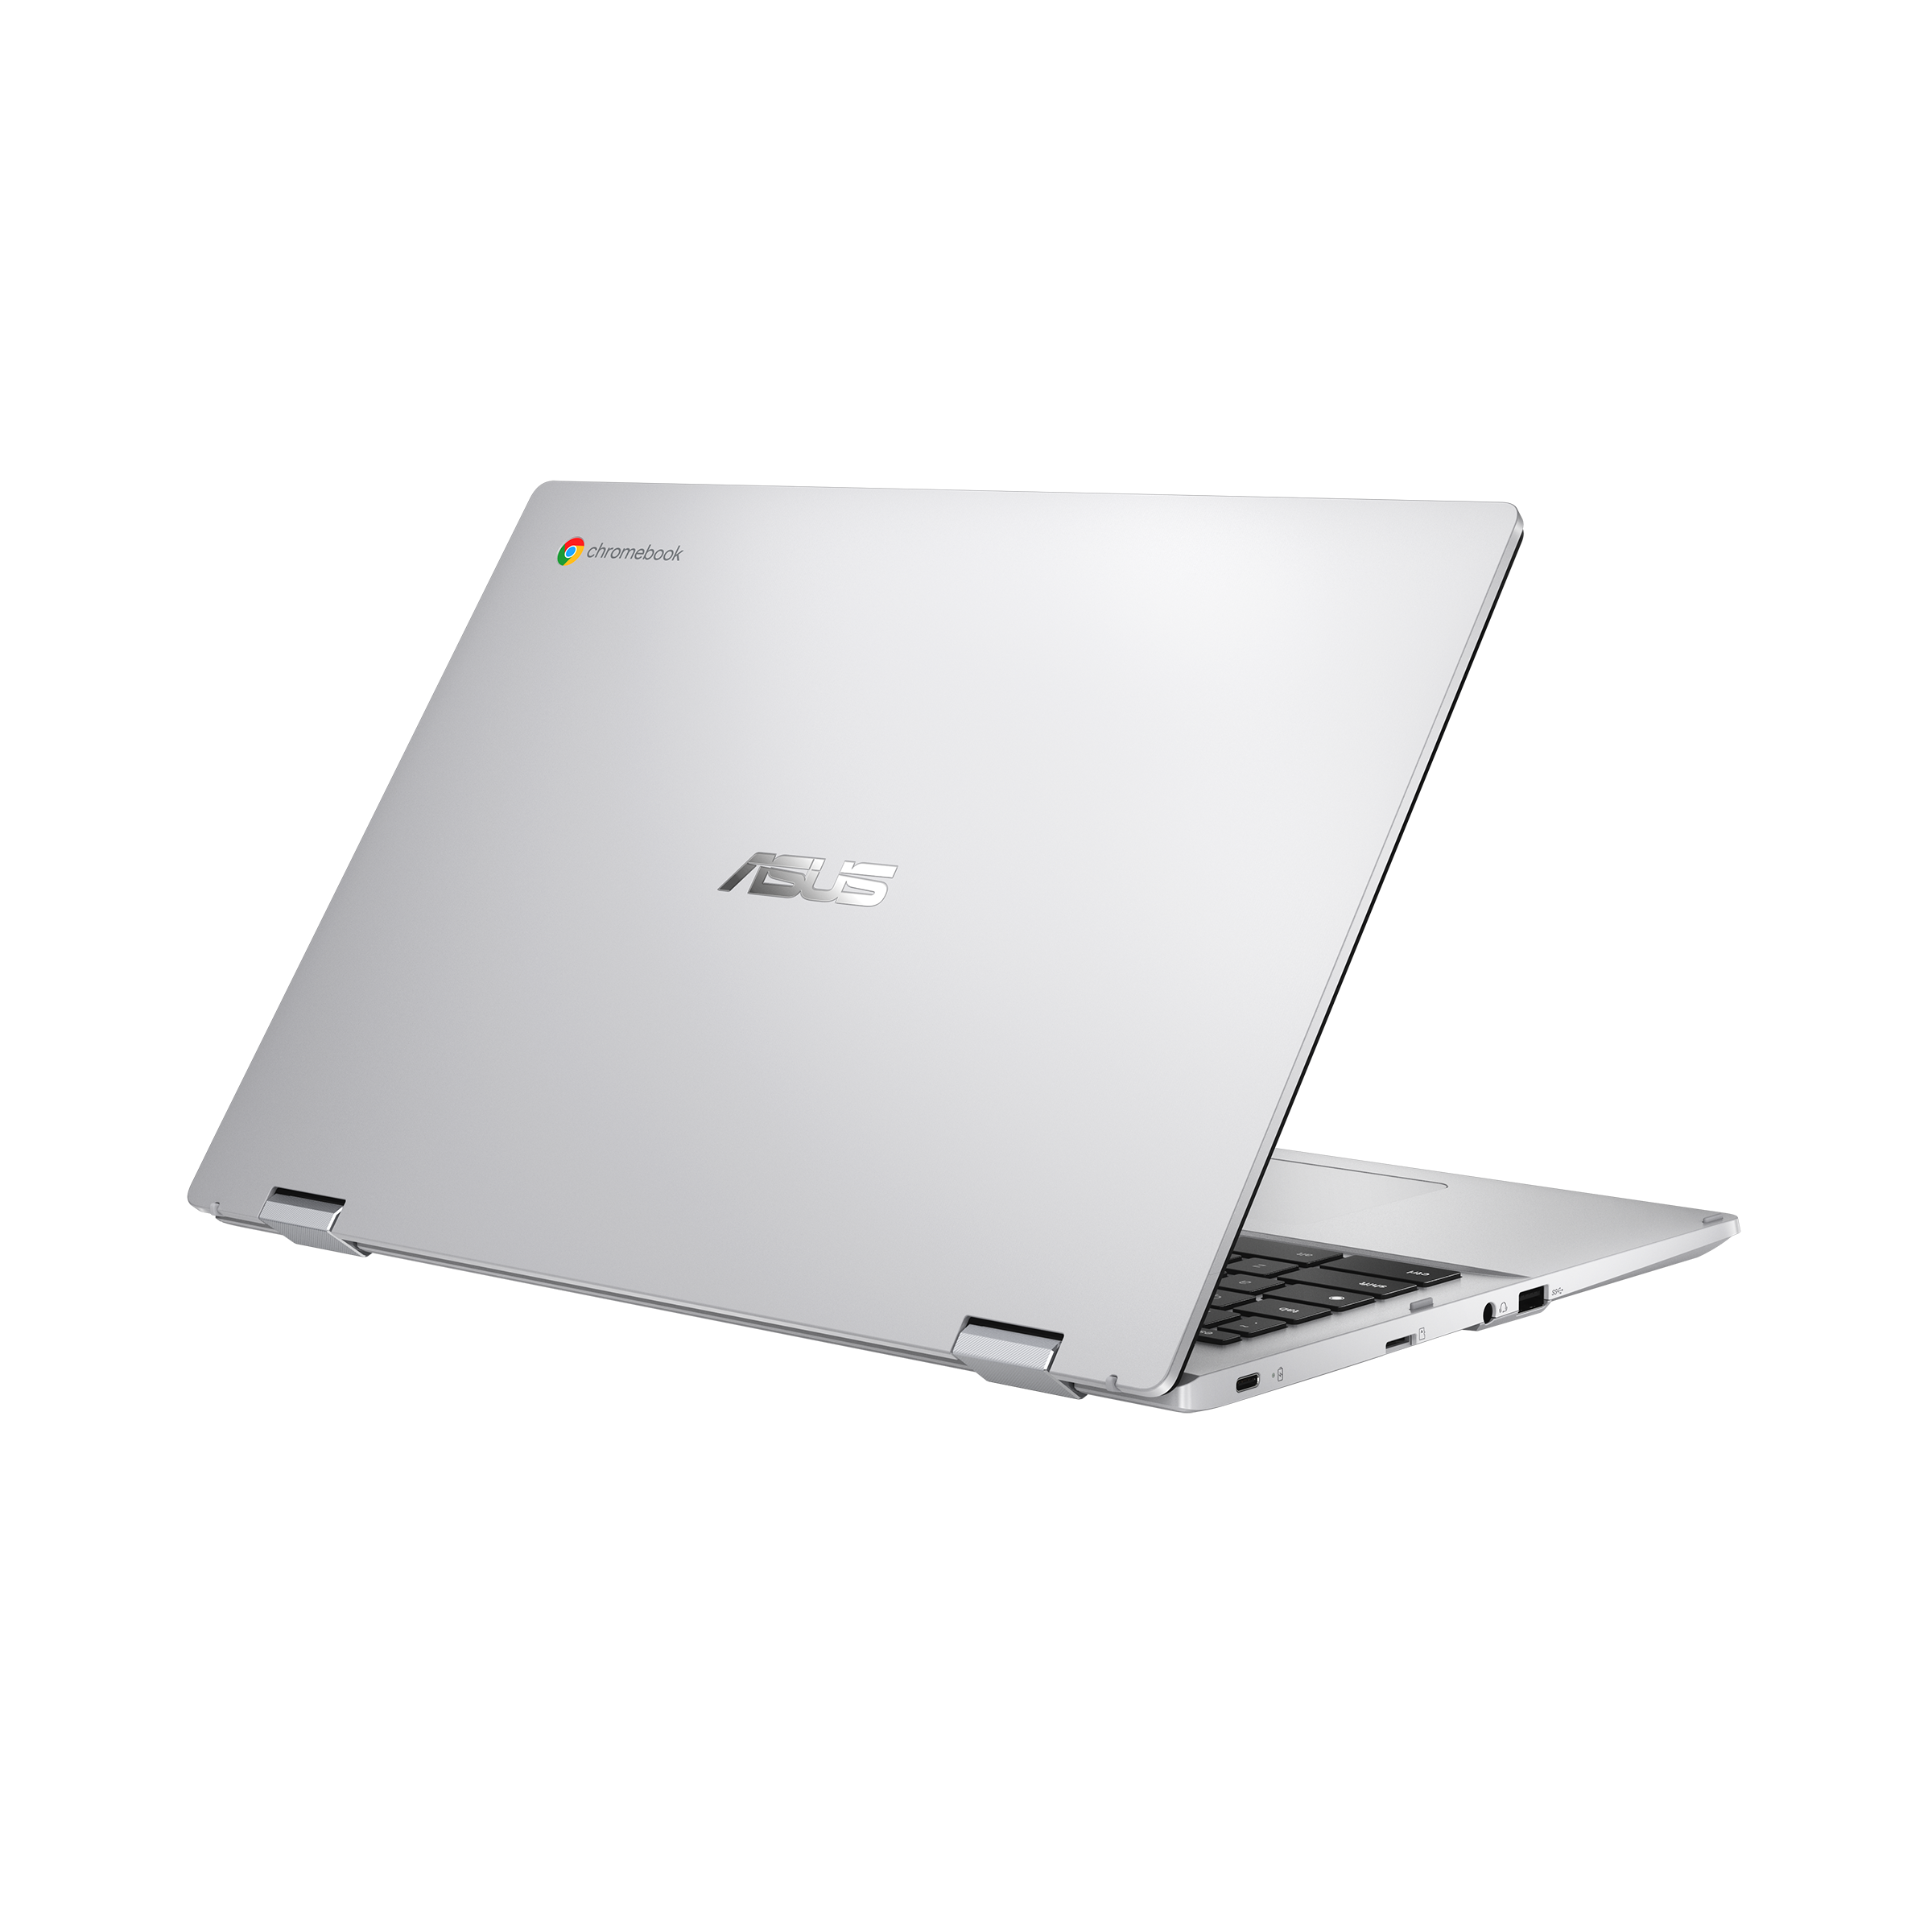 ASUS Chromebook Flip CX1 (CX1500)